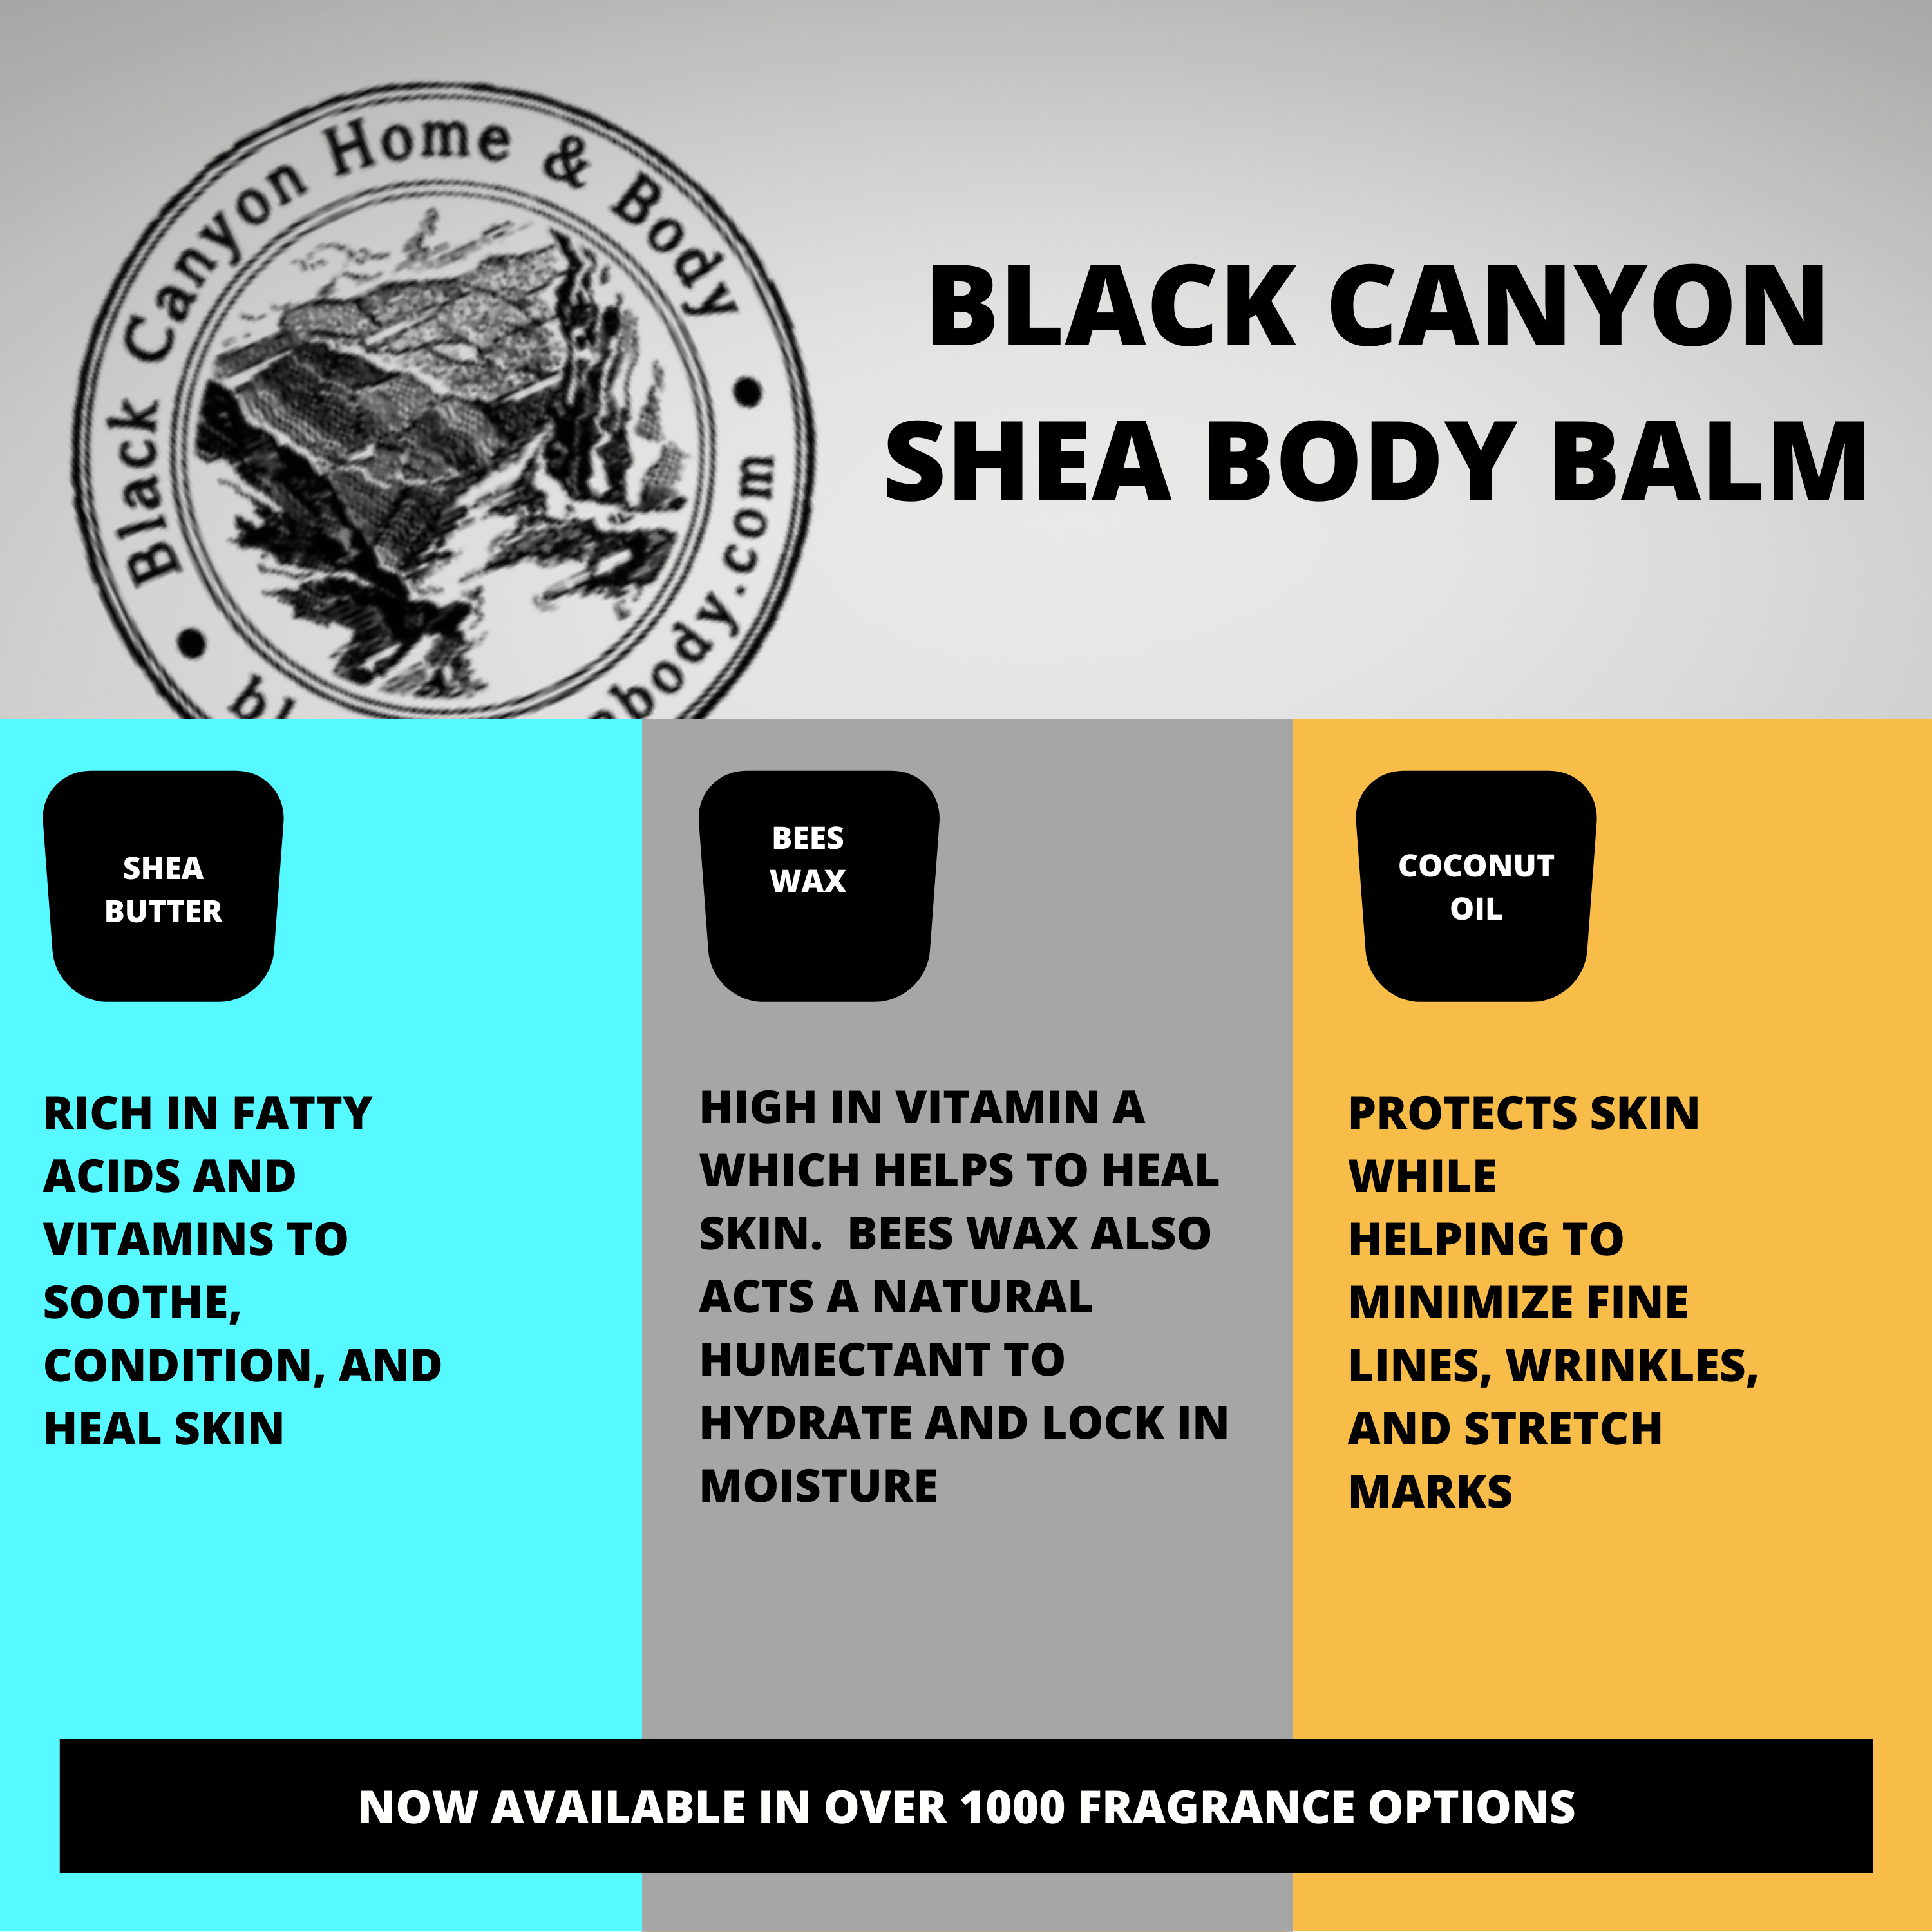 Black Canyon Lemongrass & Clove Scented Natural Body Balm with Shea